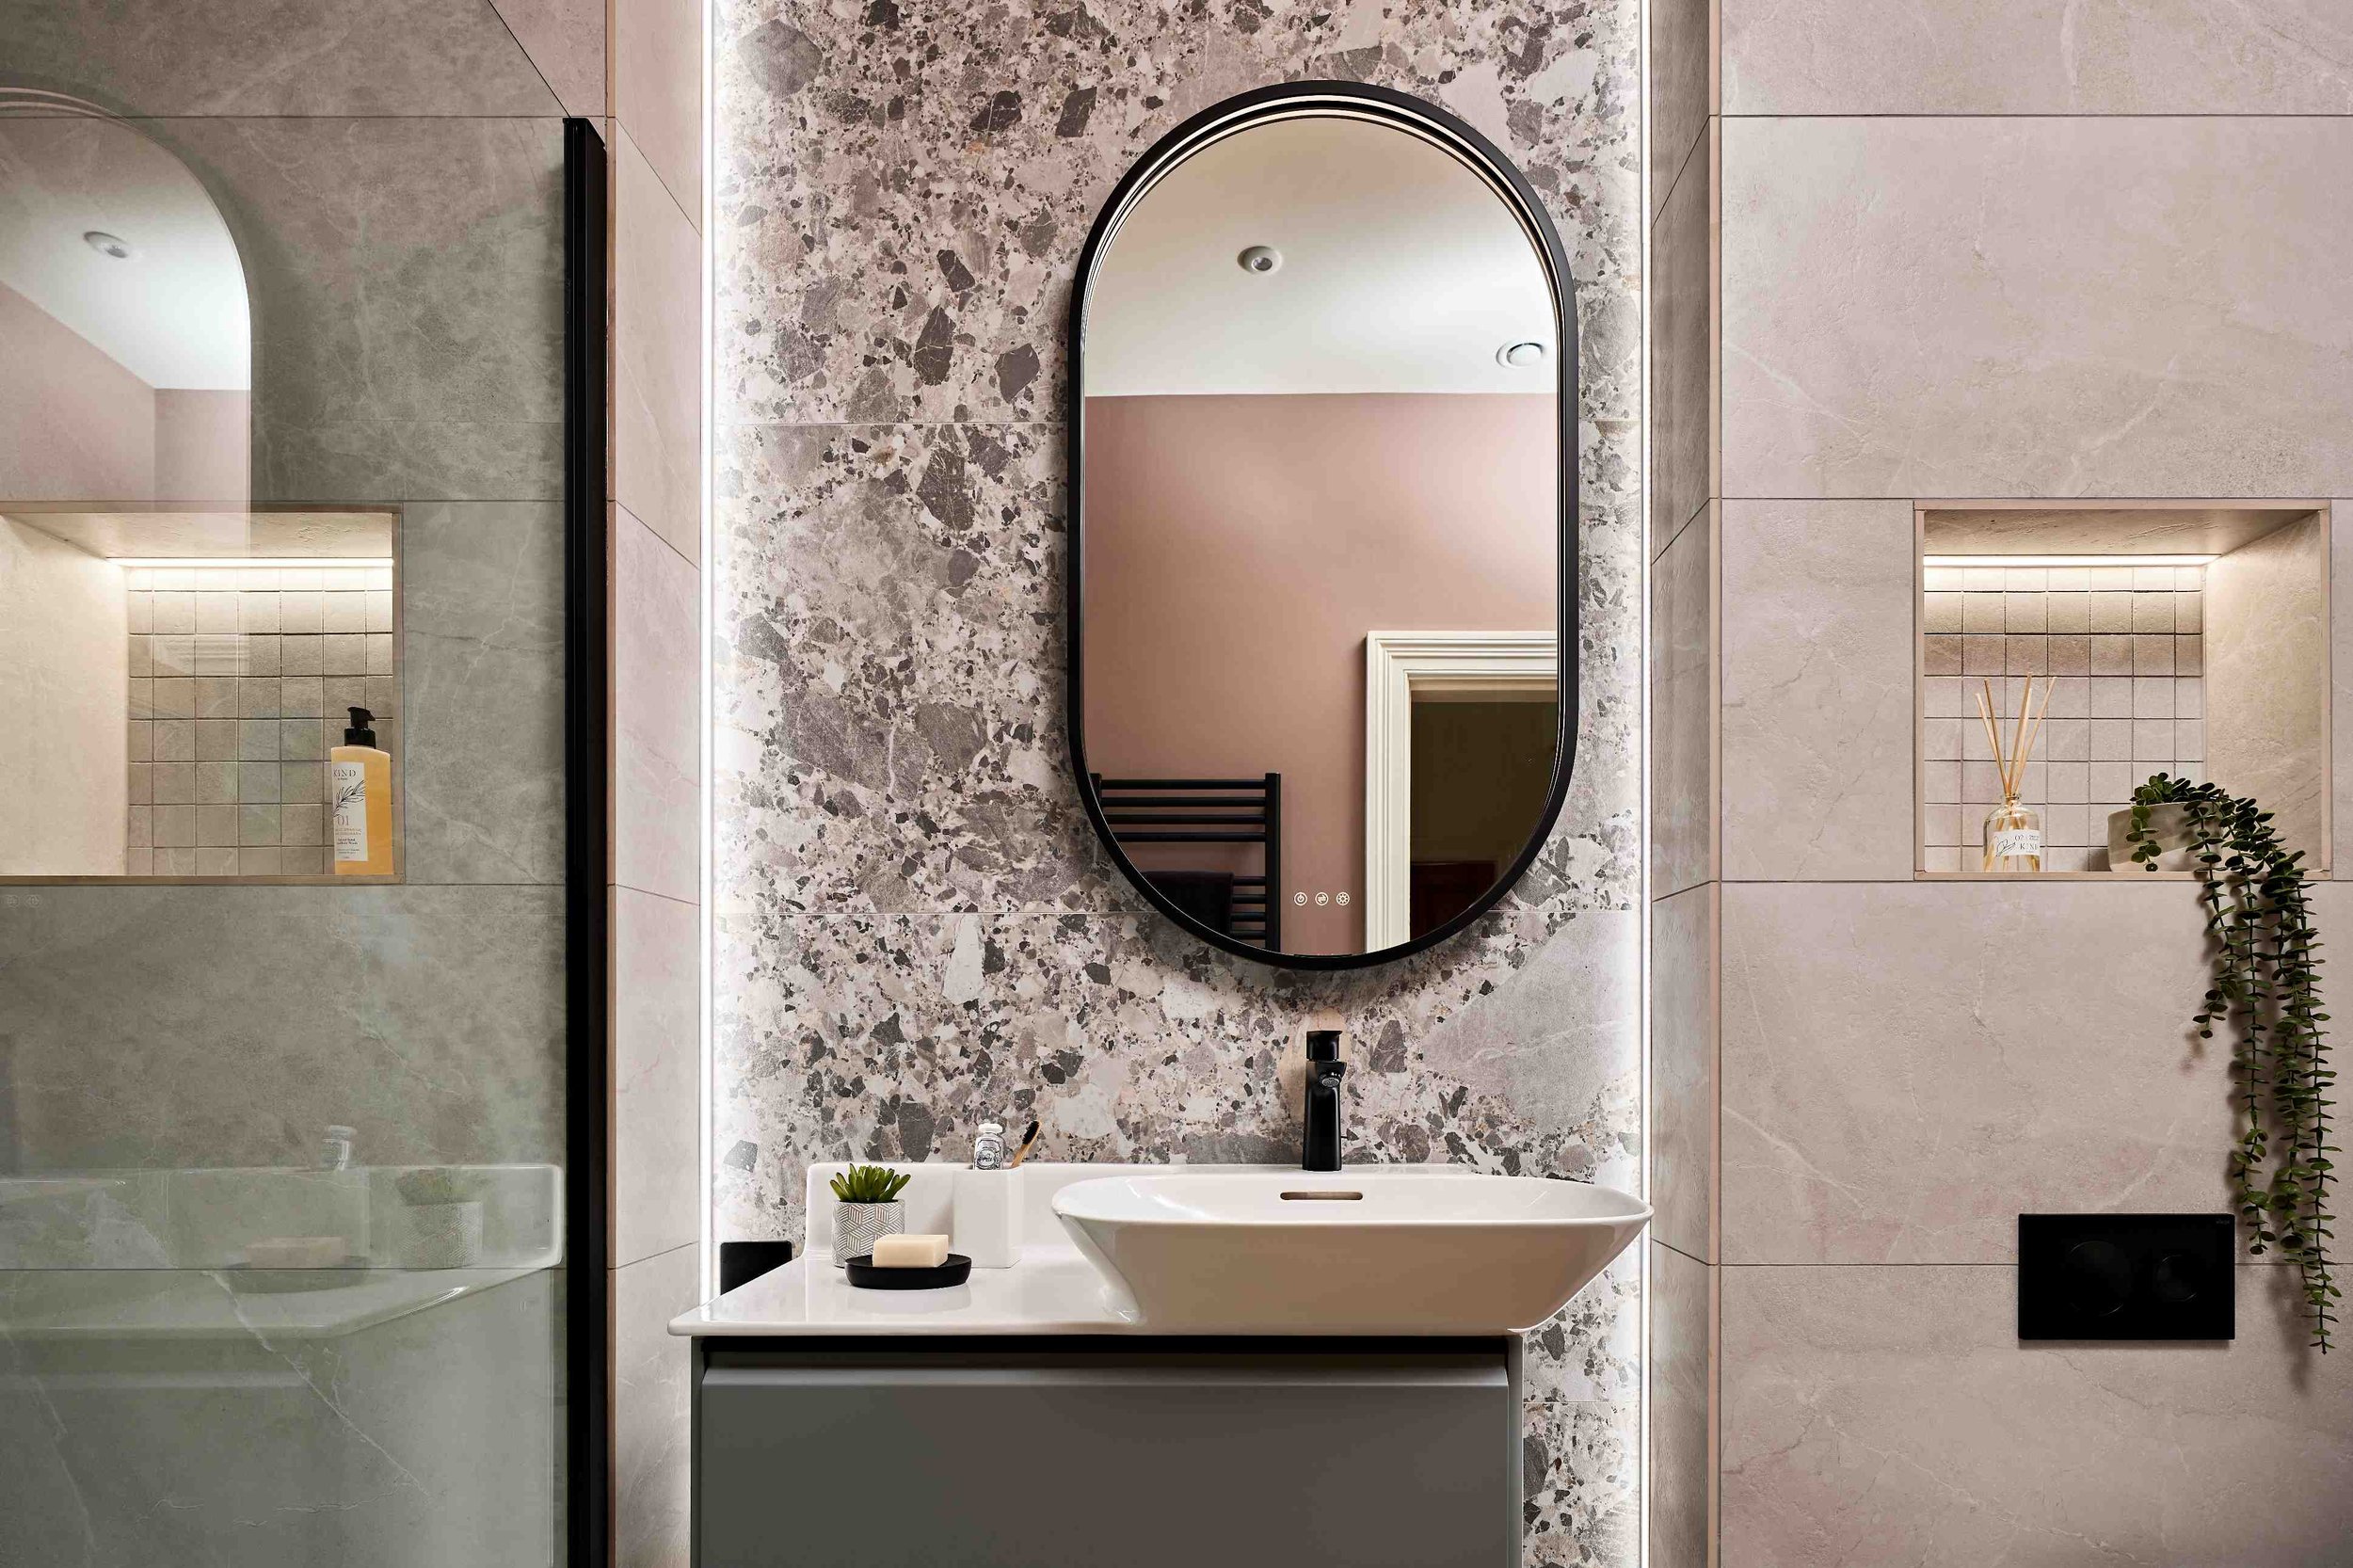 ripples-bathroom-with-oval-mirror-and-atmospheric-lighting.jpg